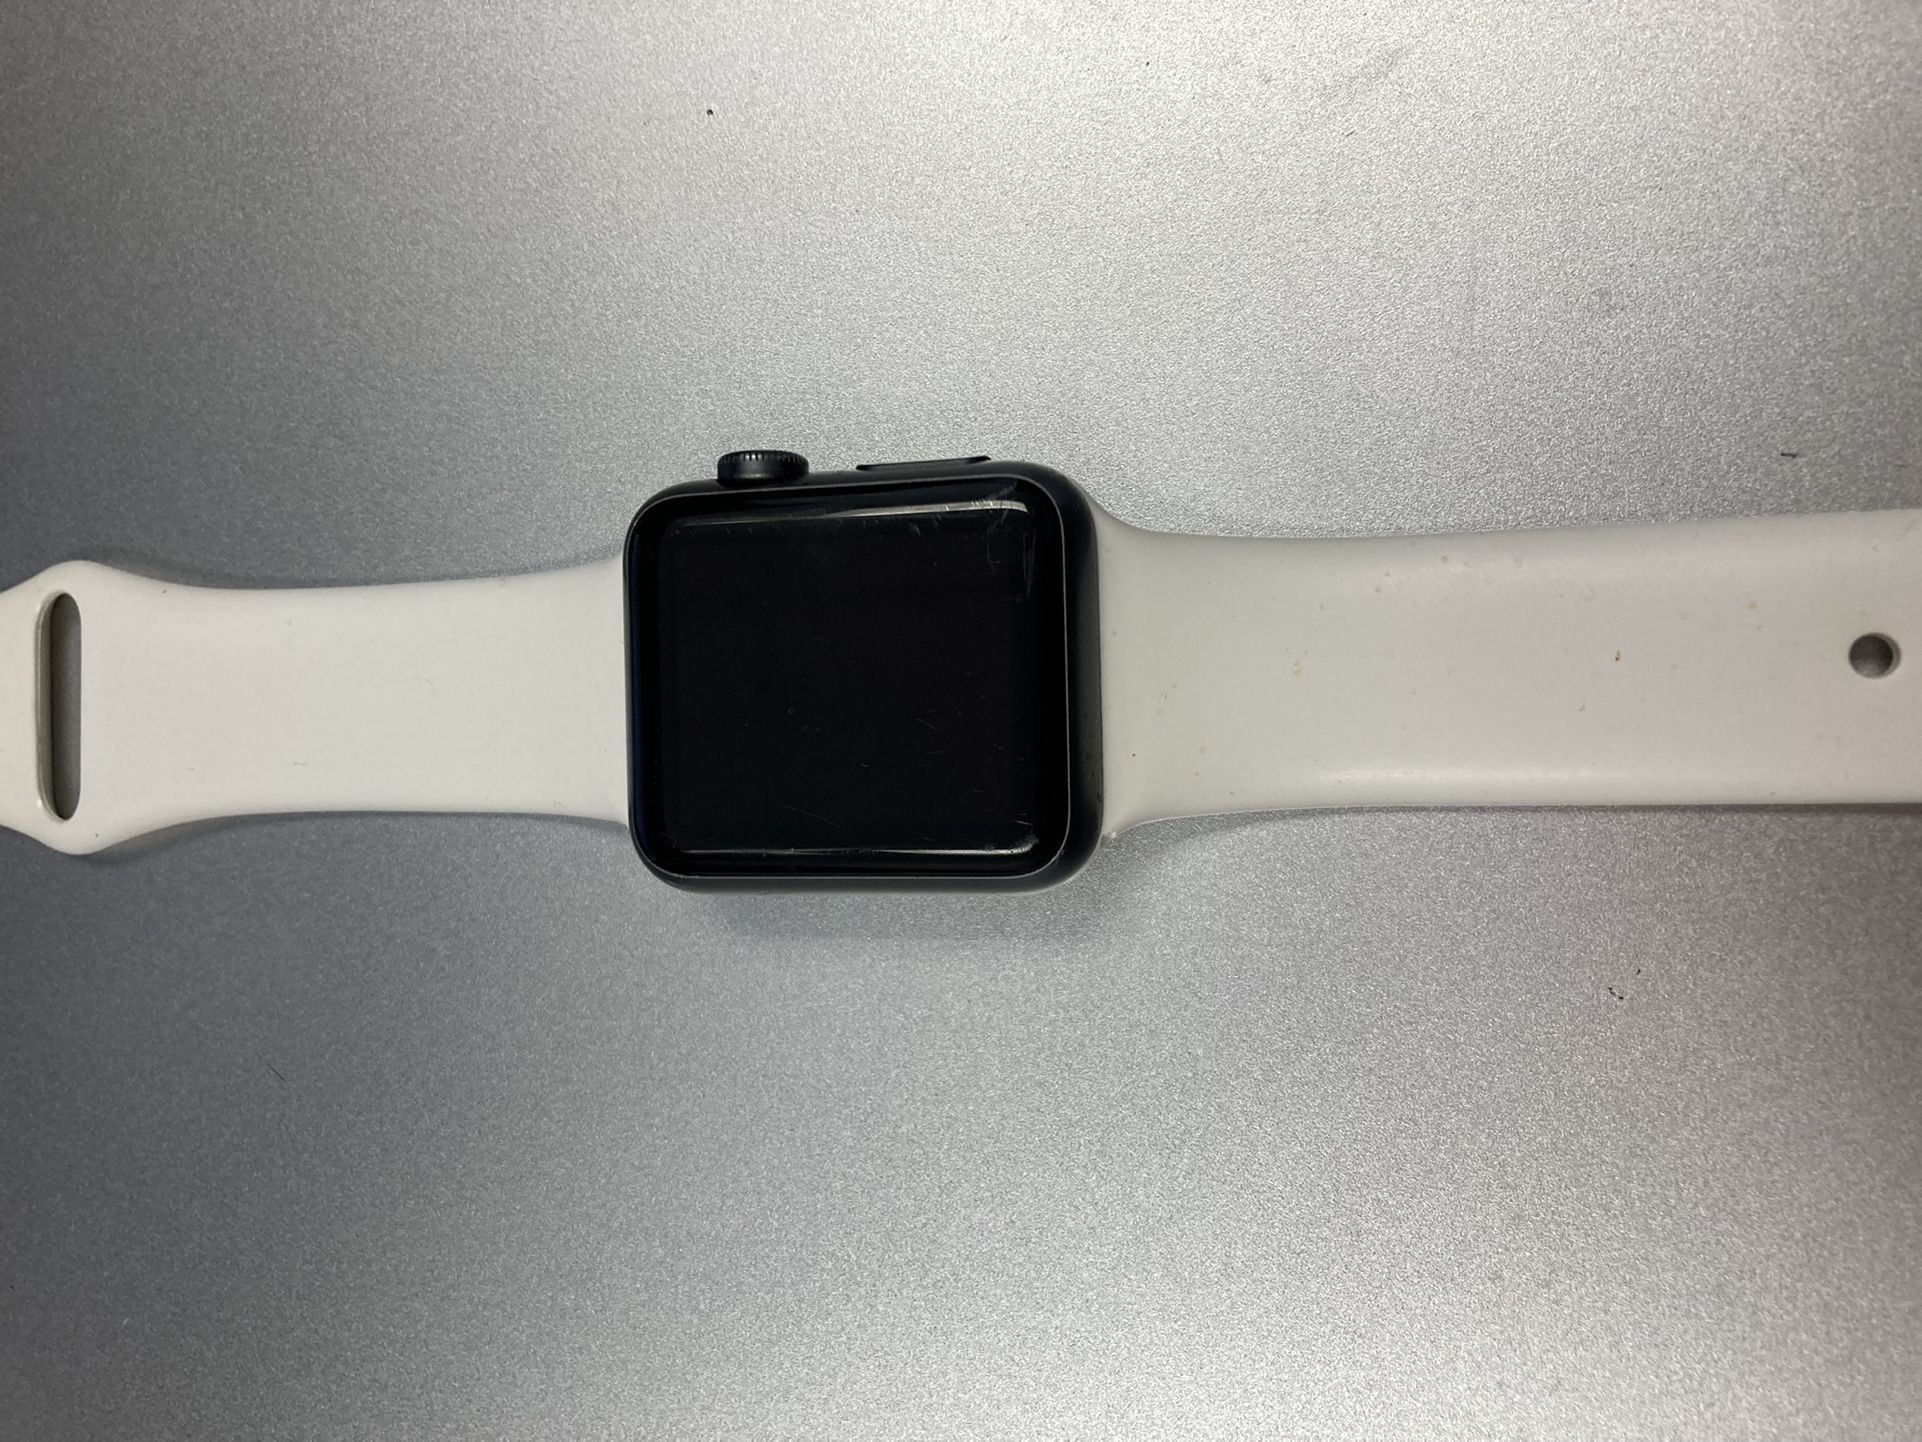 Series 2 Apple Watch 